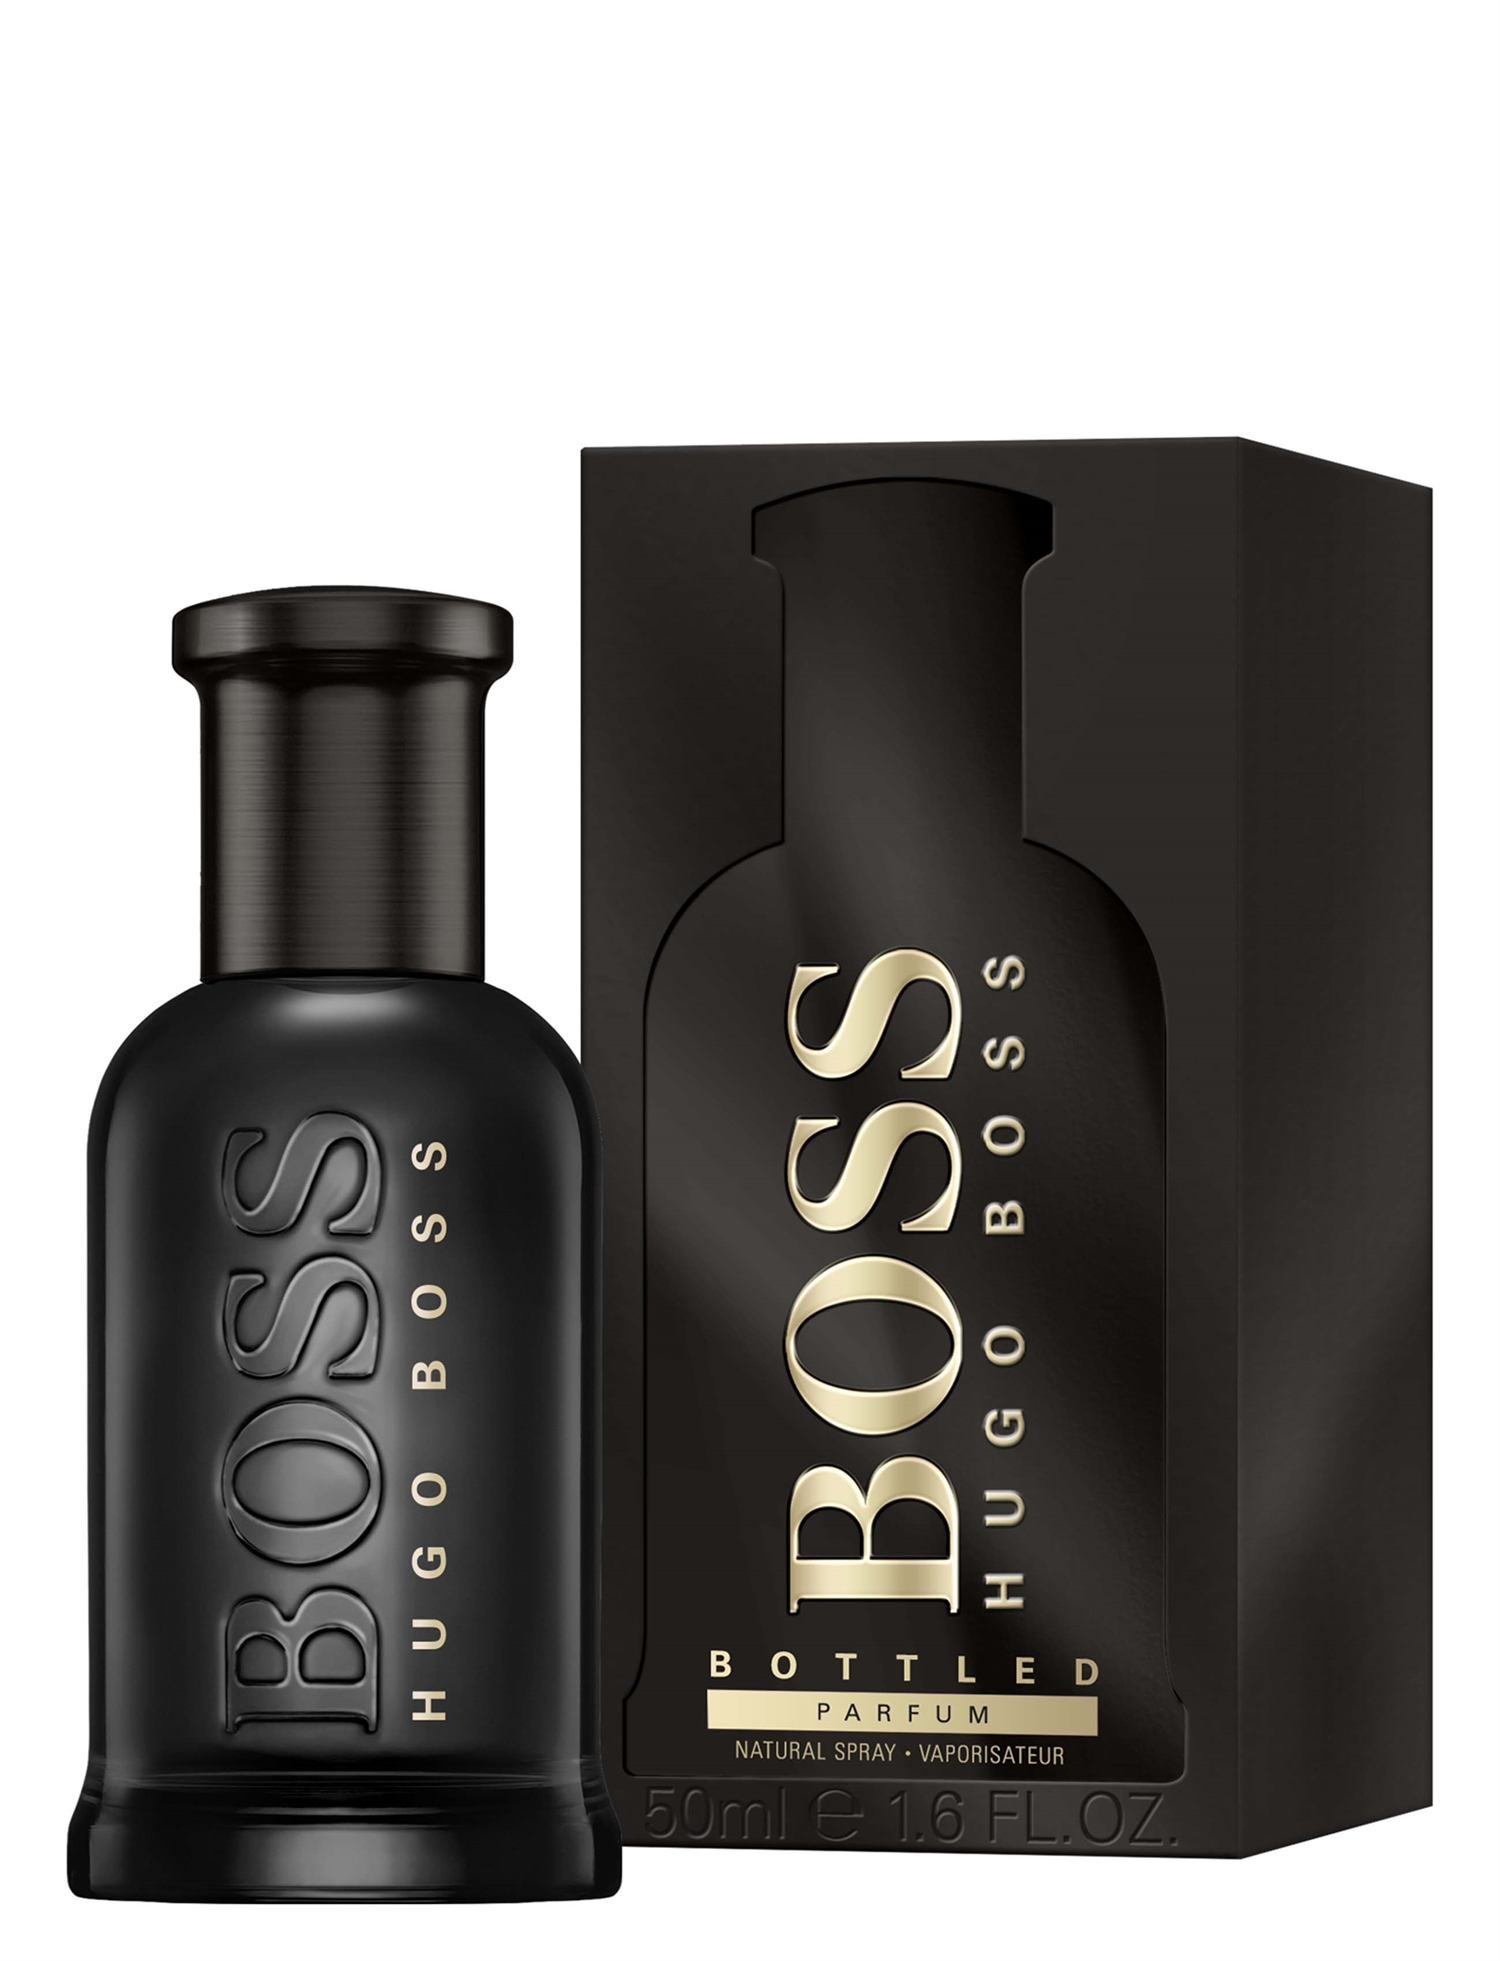 HUGO BOSS Bottled Parfum Parfum 50